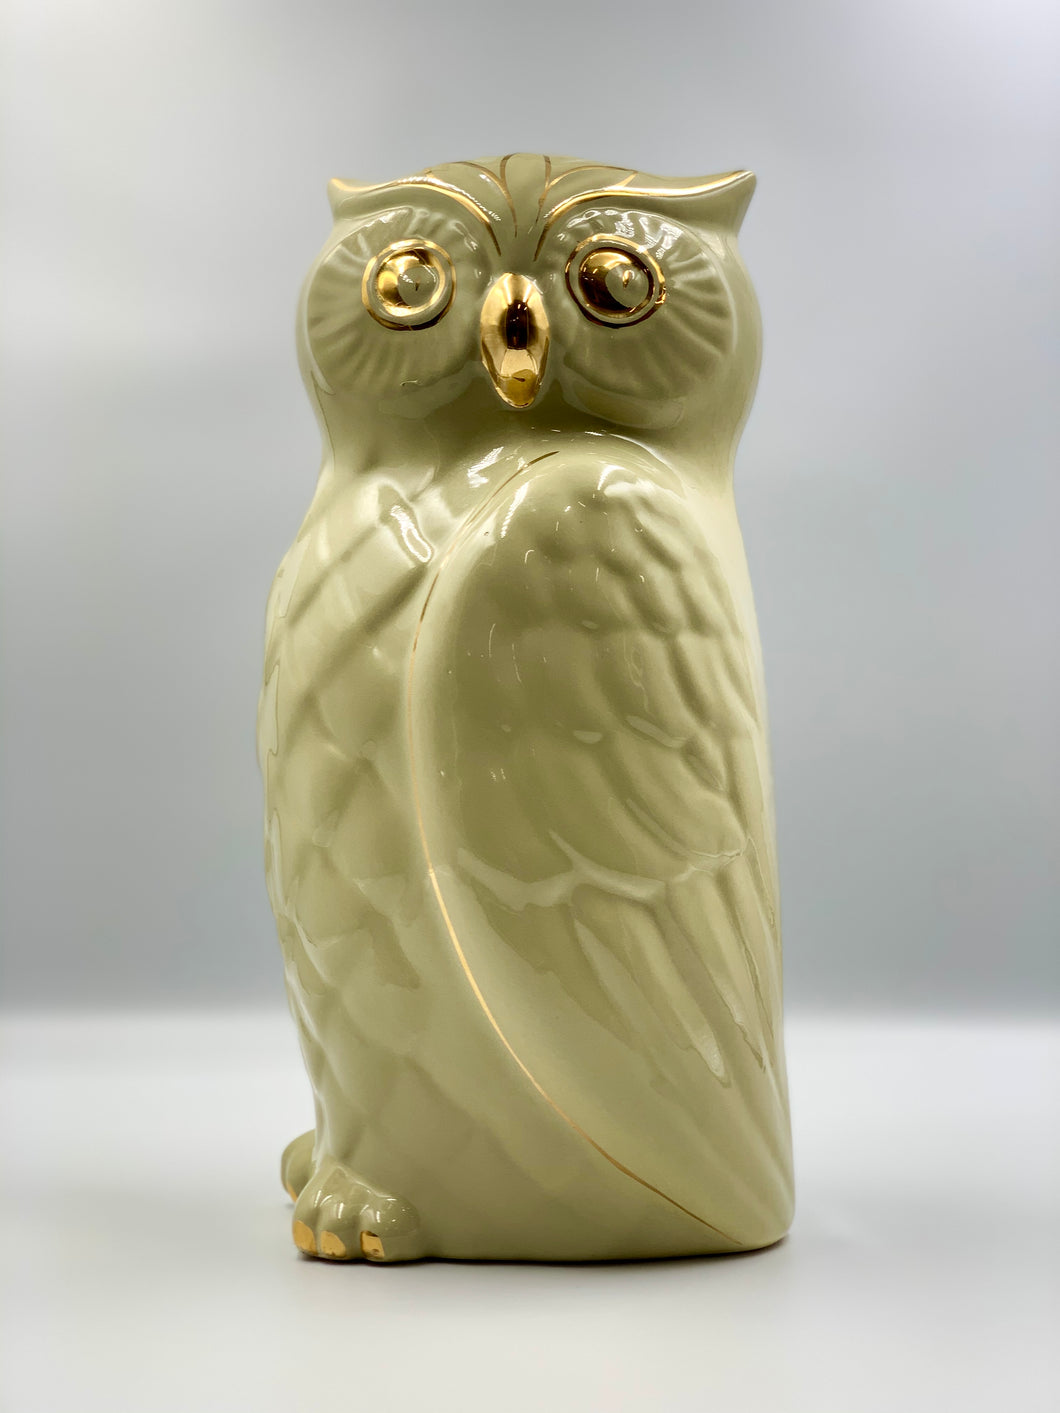 Vintage Ceramic Owl